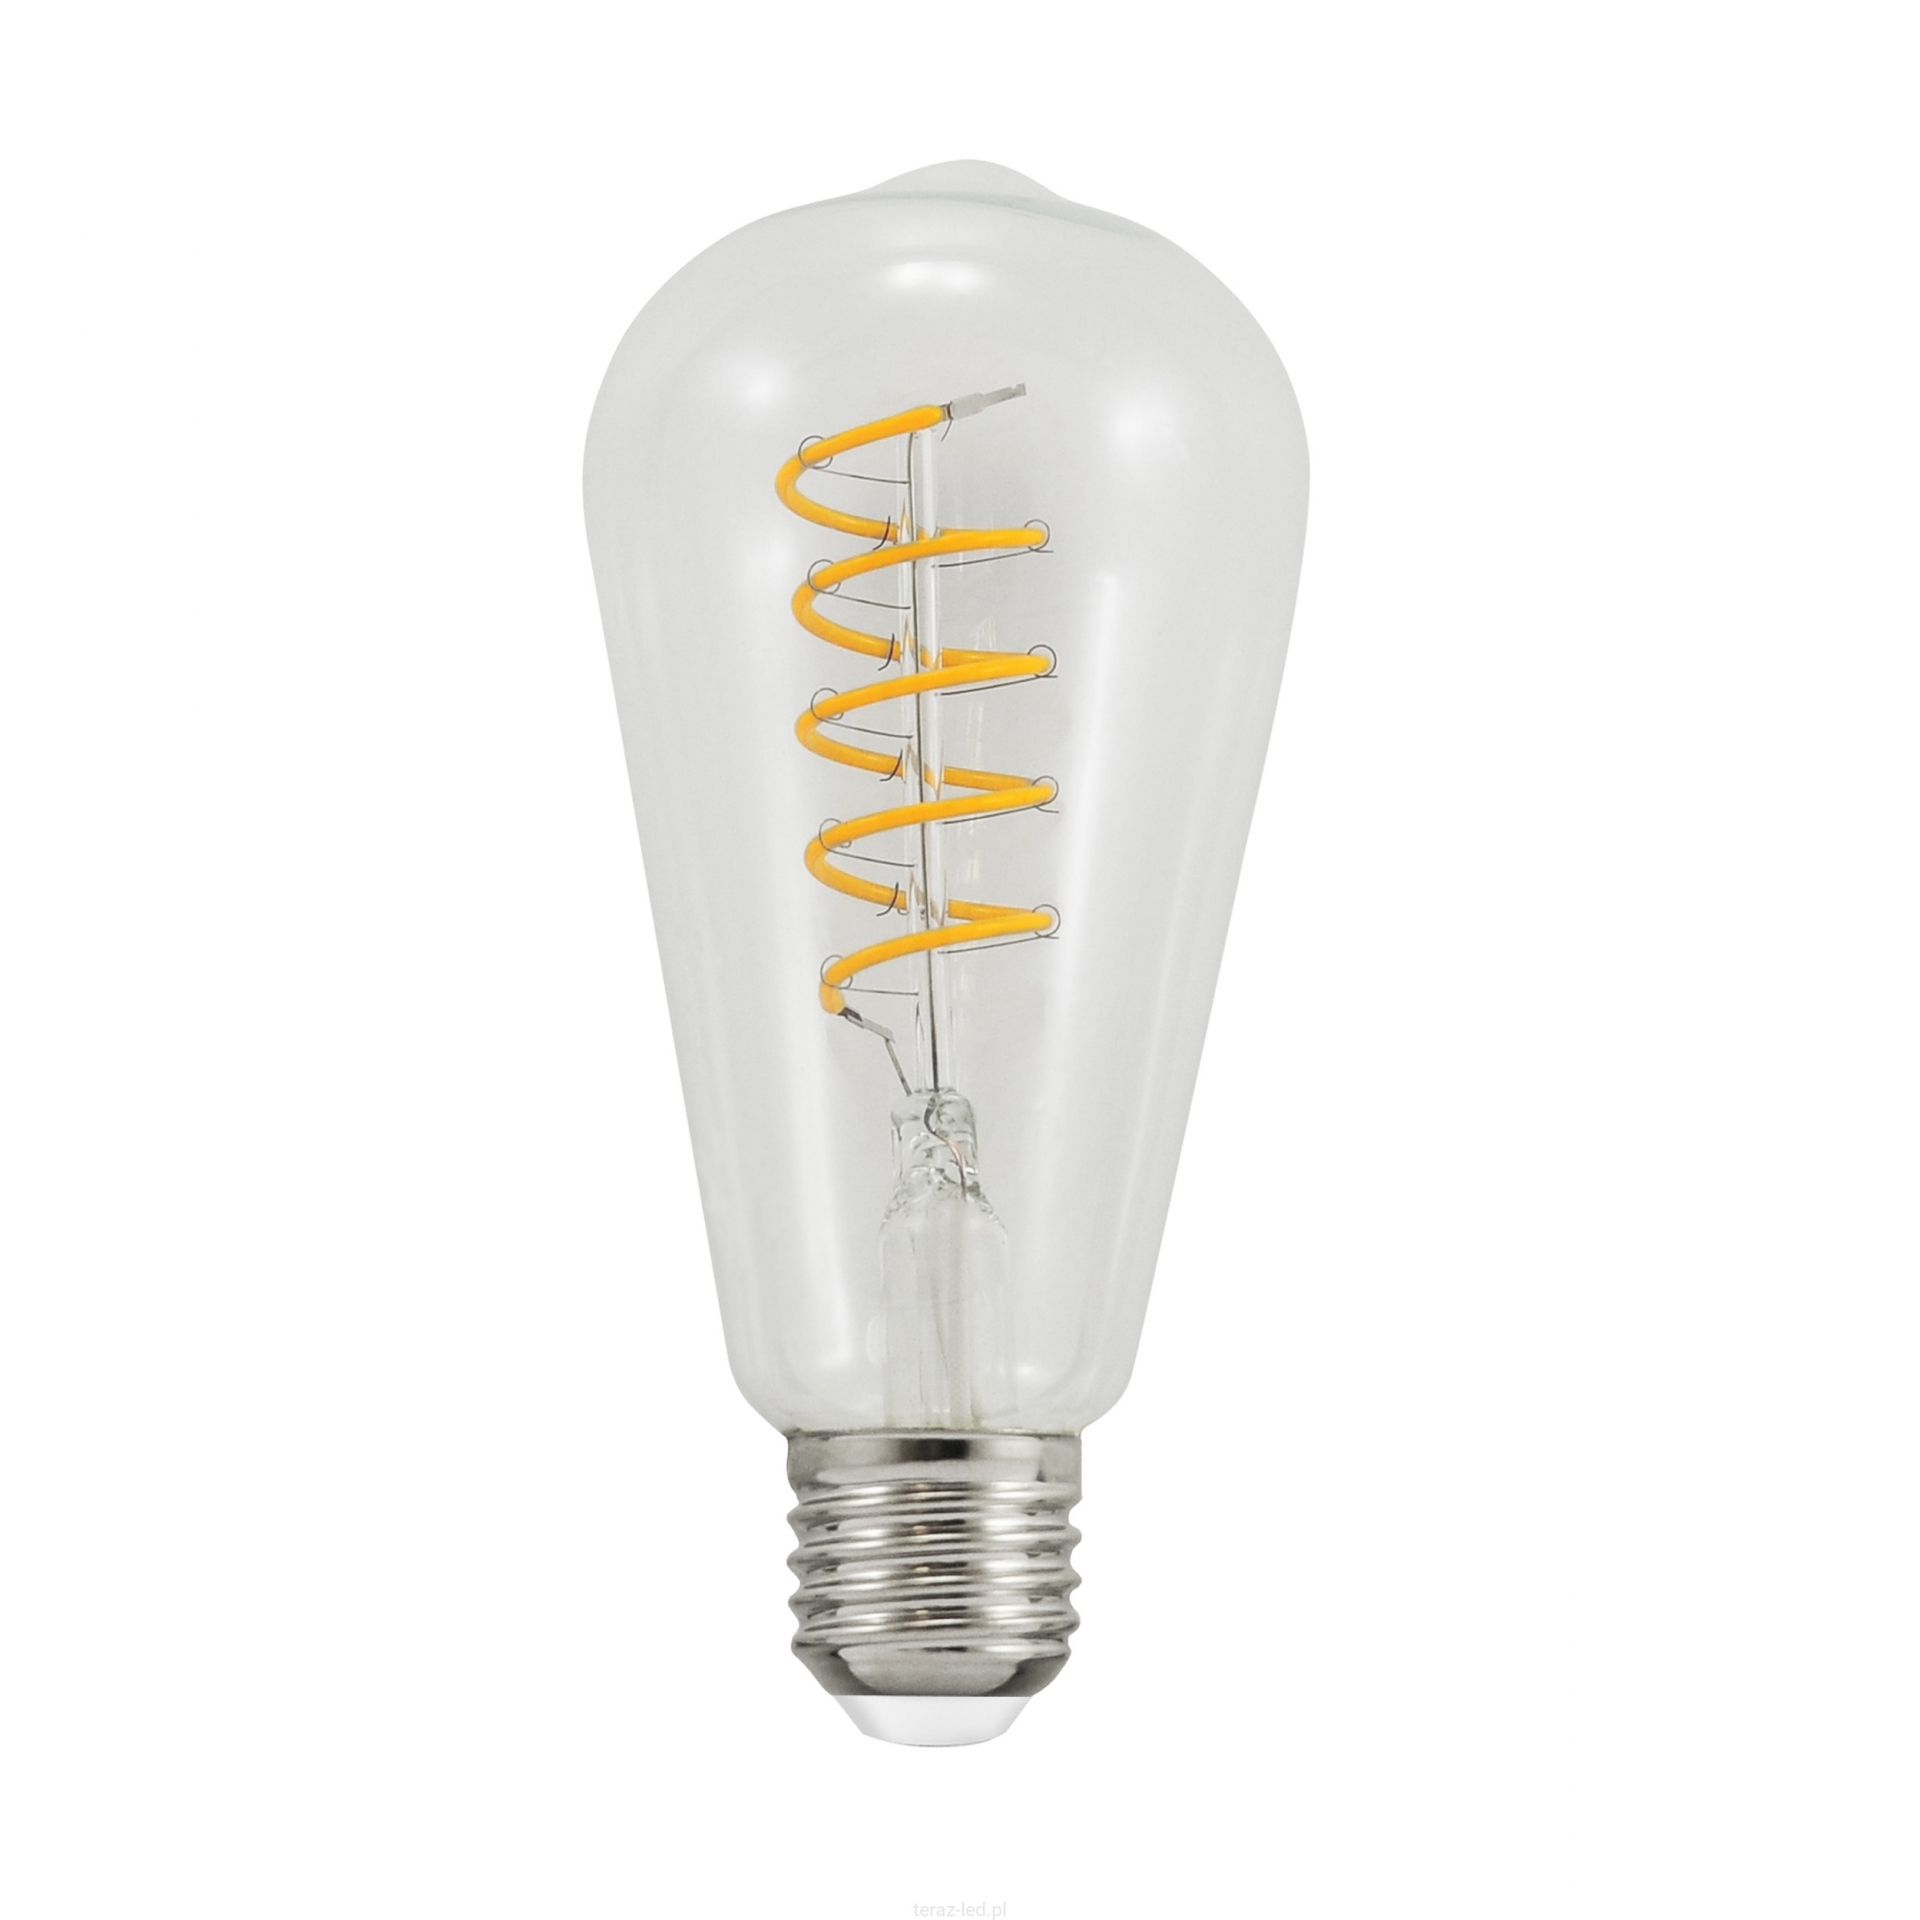 Neuken Caius Sanctie Filament LED-lamp E27 4 Watt 210 lumen 2200 kelvin - Spiraal - ABC-led.nl